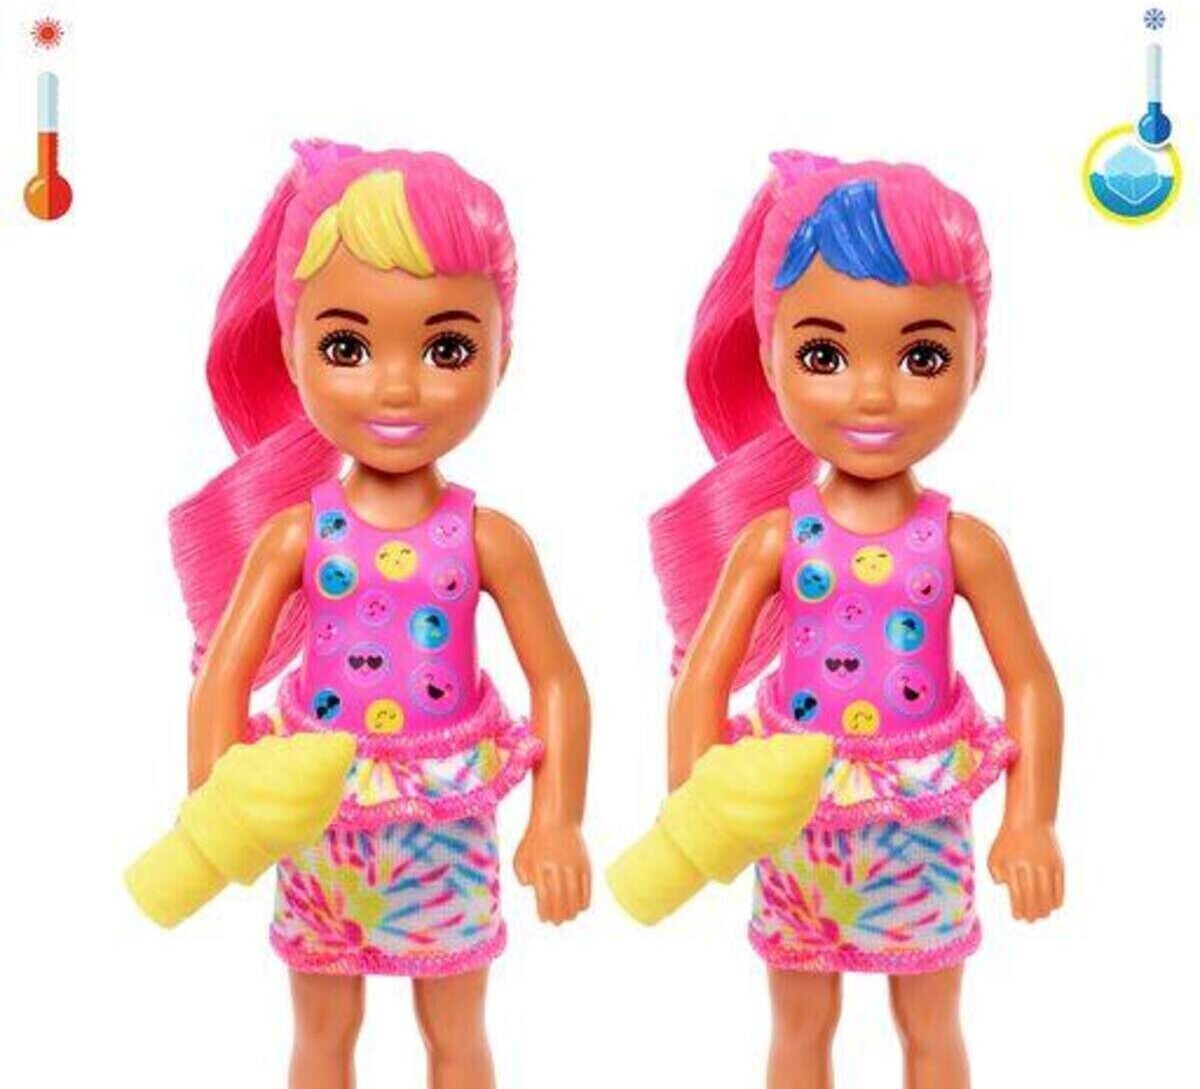 Barbie Ultimate Color Reveal Fashion (1 pcs) - Assorted